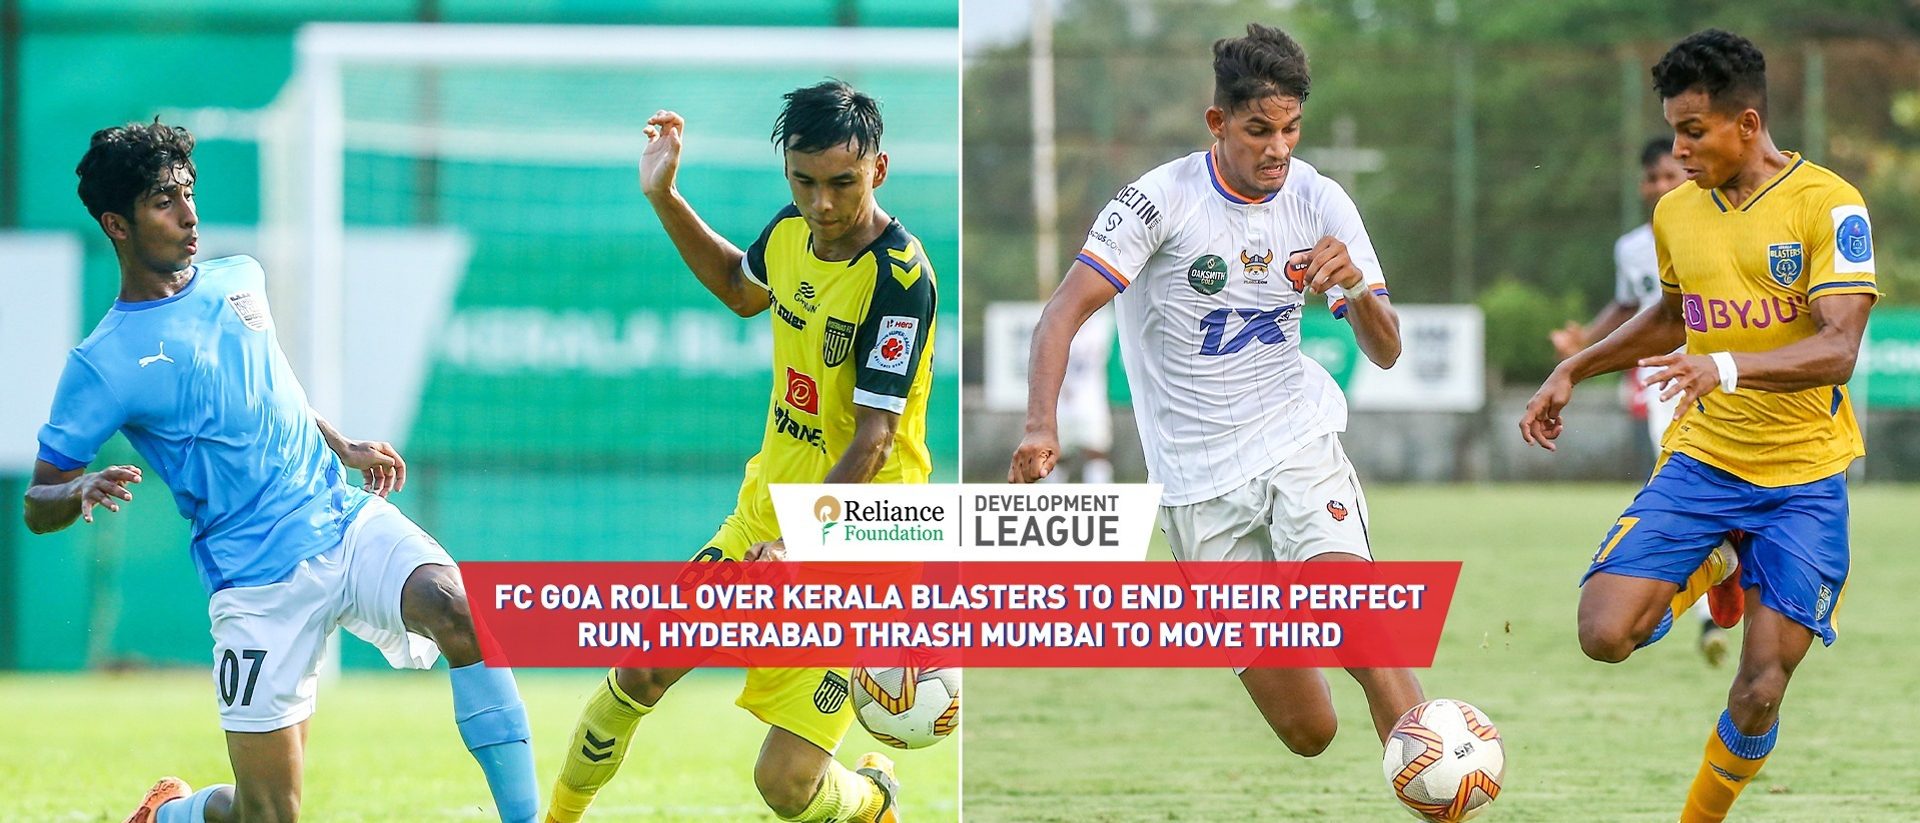 FC Goa roll over Kerala Blasters to end their perfect run, Hyderabad thrash Mumbai to move third